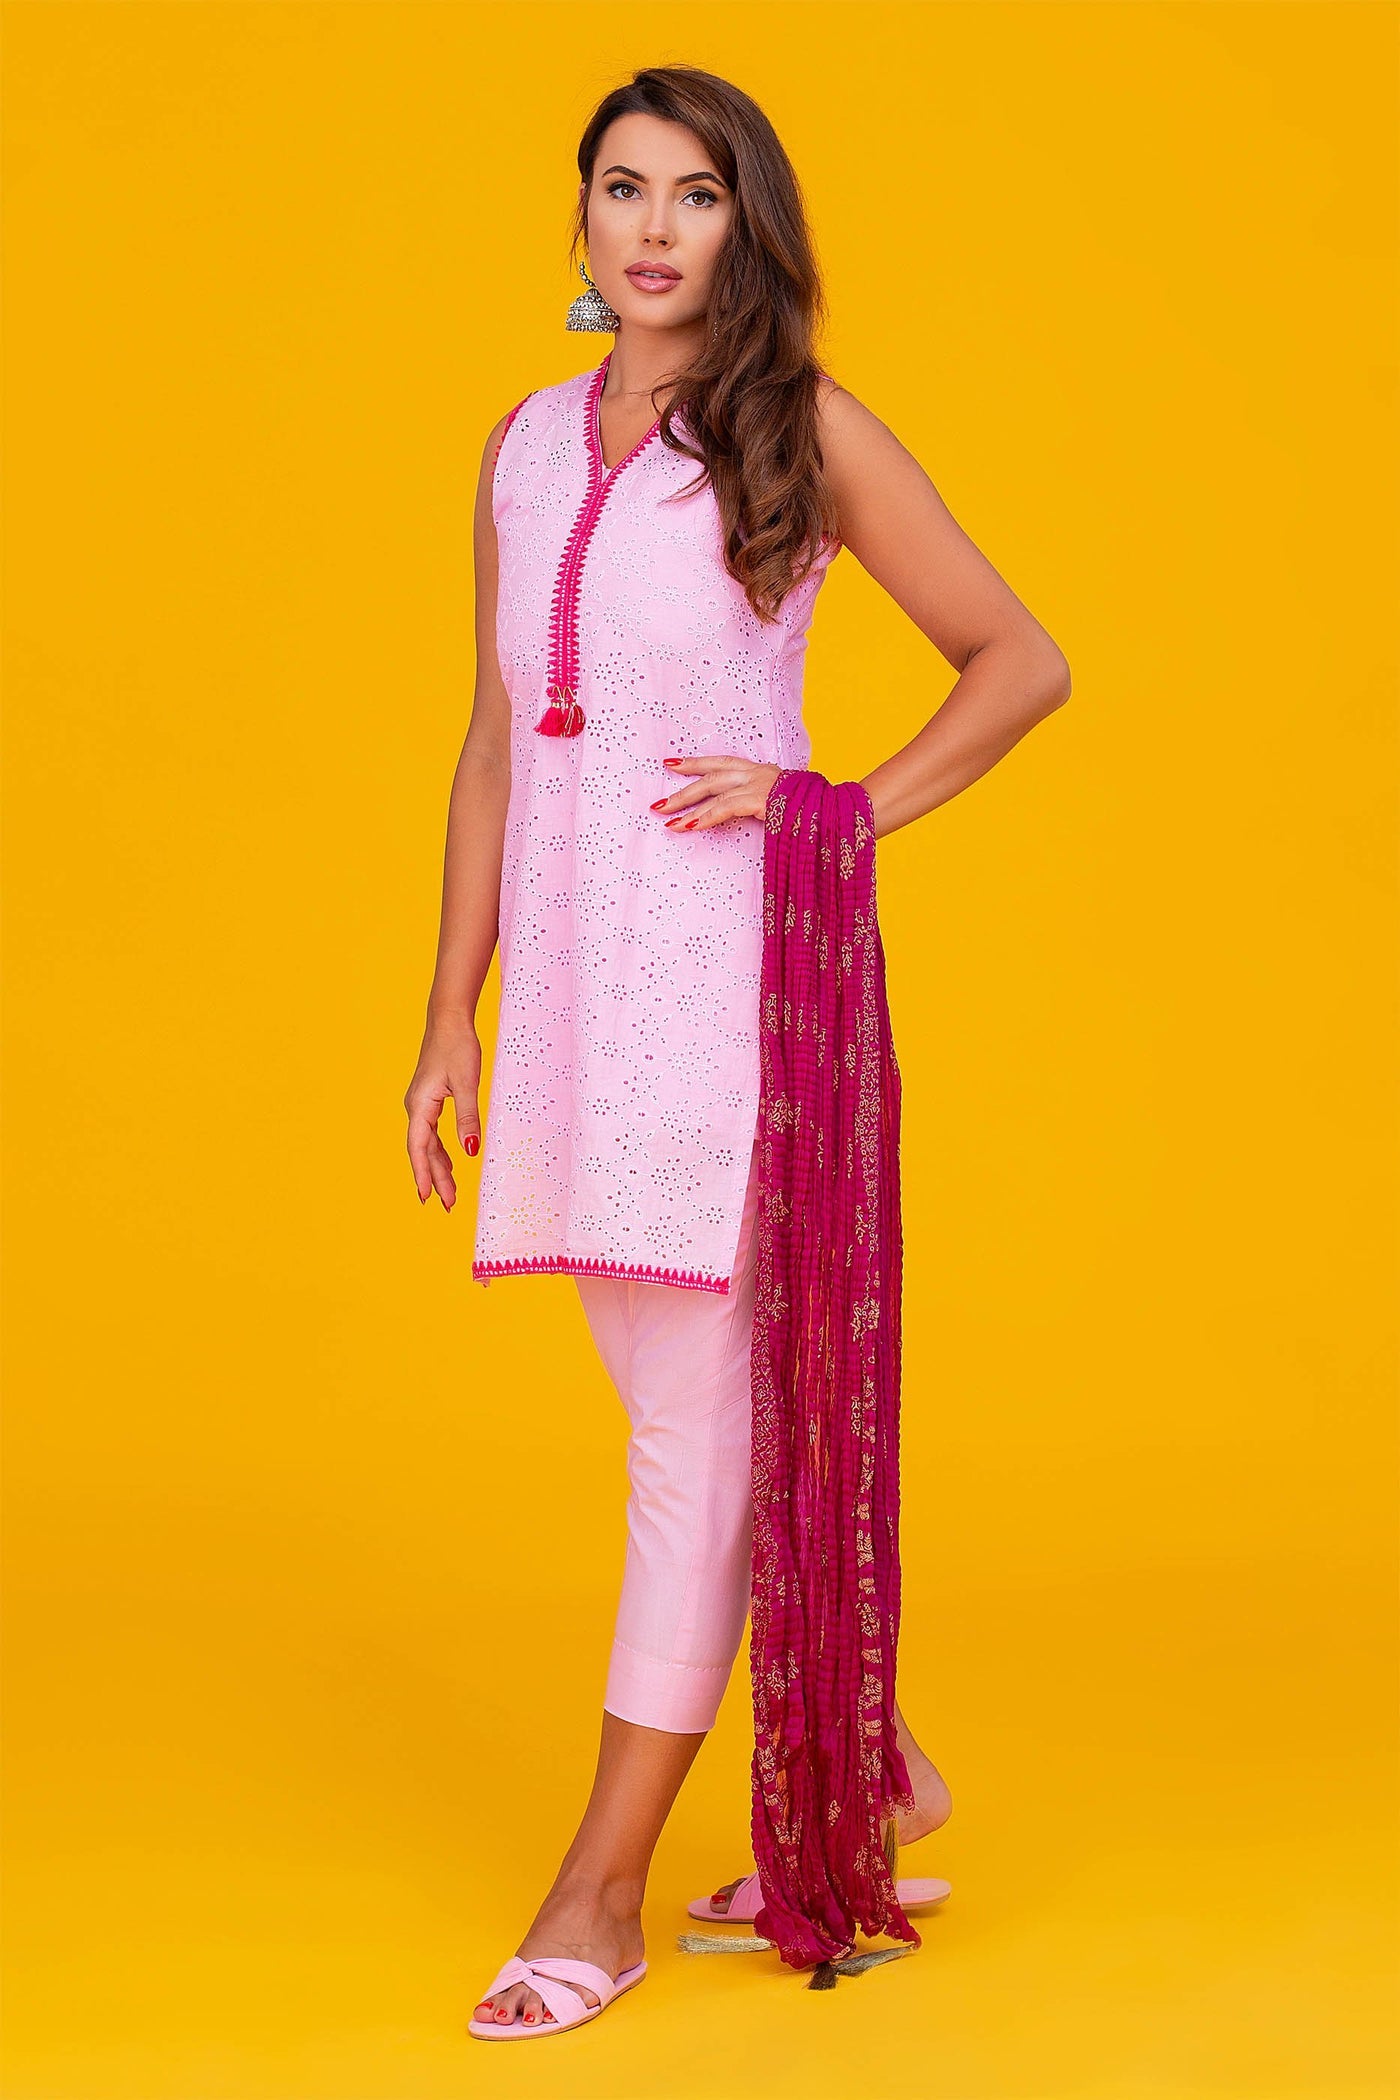 Dahlia pakistani clothes for sale - Maria Nasir